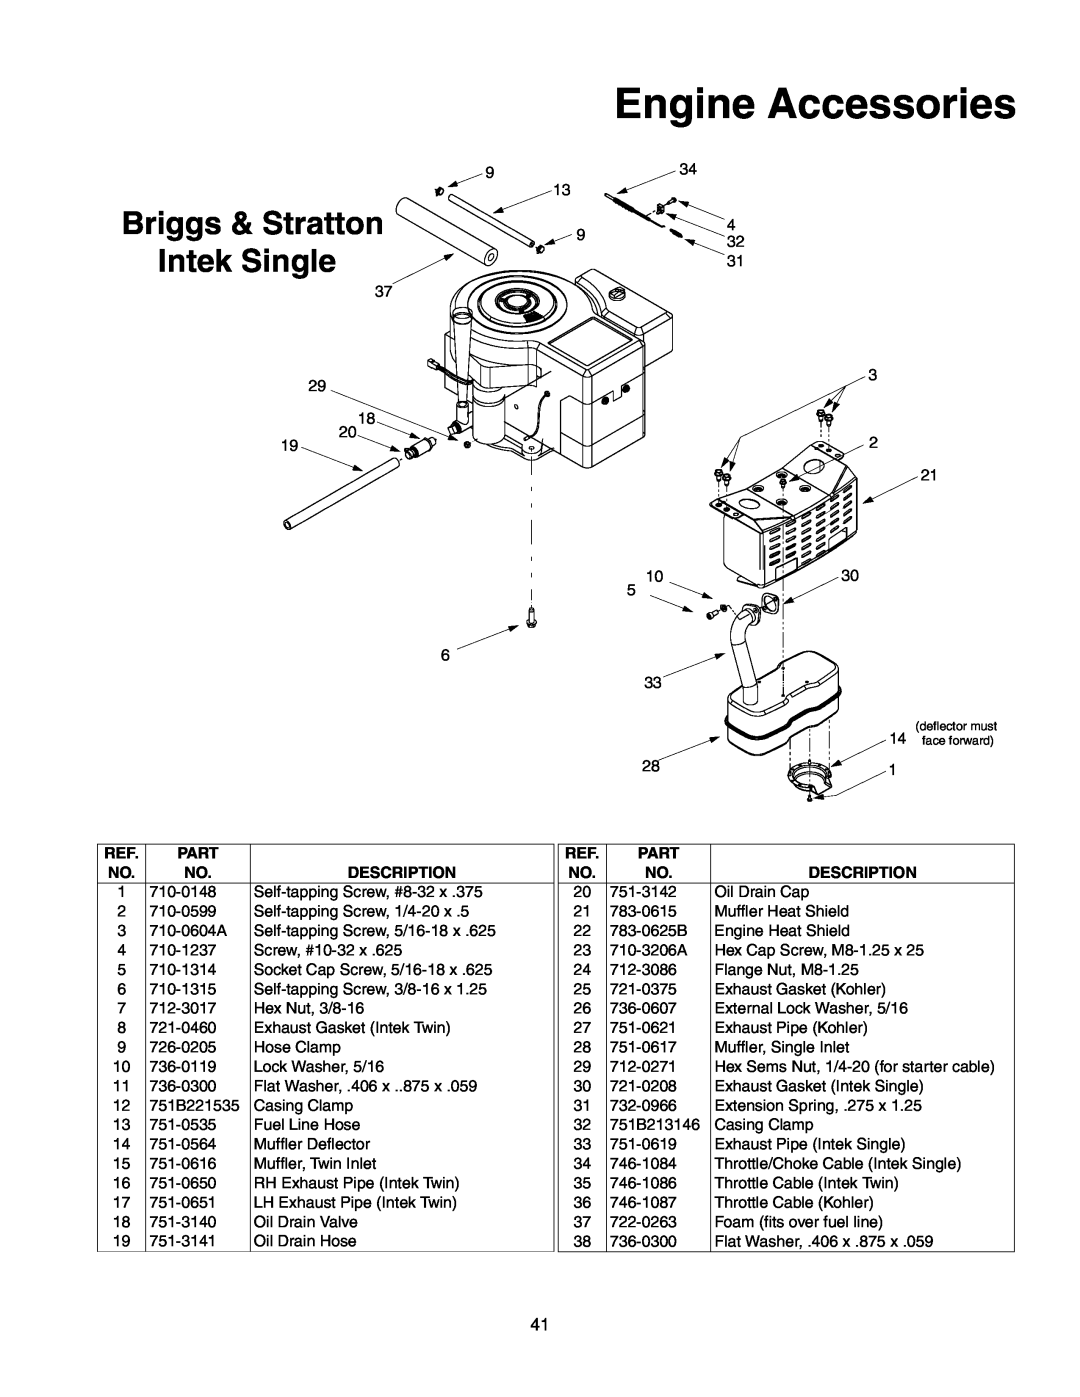 Yard-Man 604 manual Engine Accessories, Briggs & Stratton Intek Single 